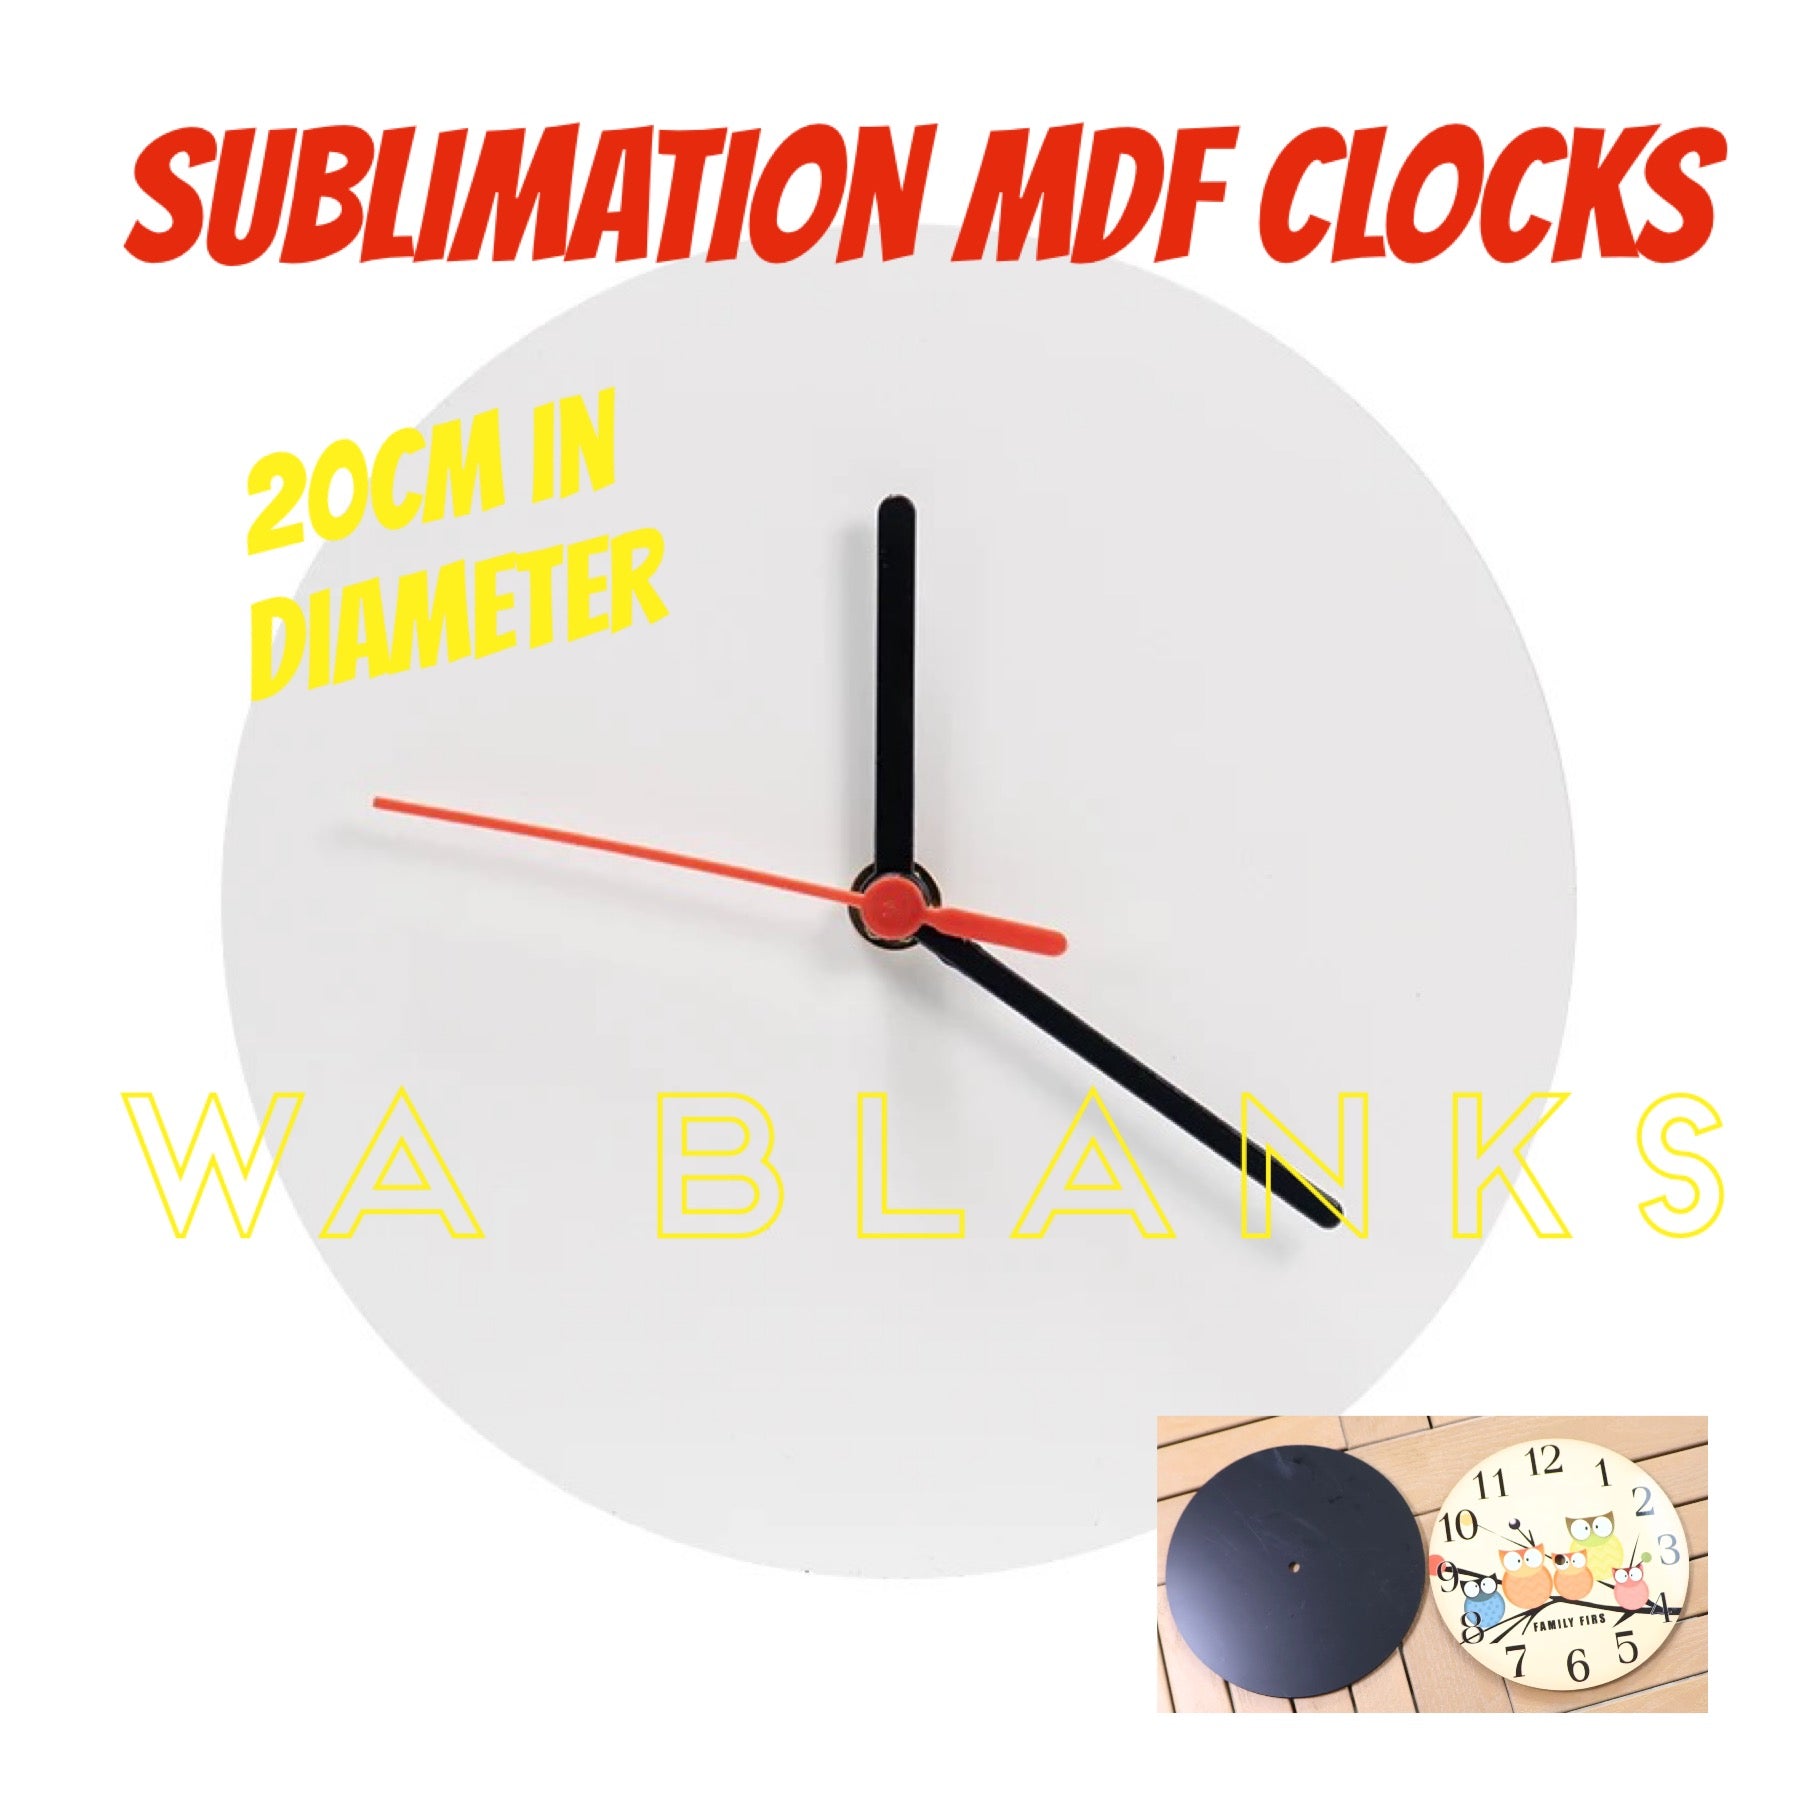 Sublimation MDF clocks – WA Blanks